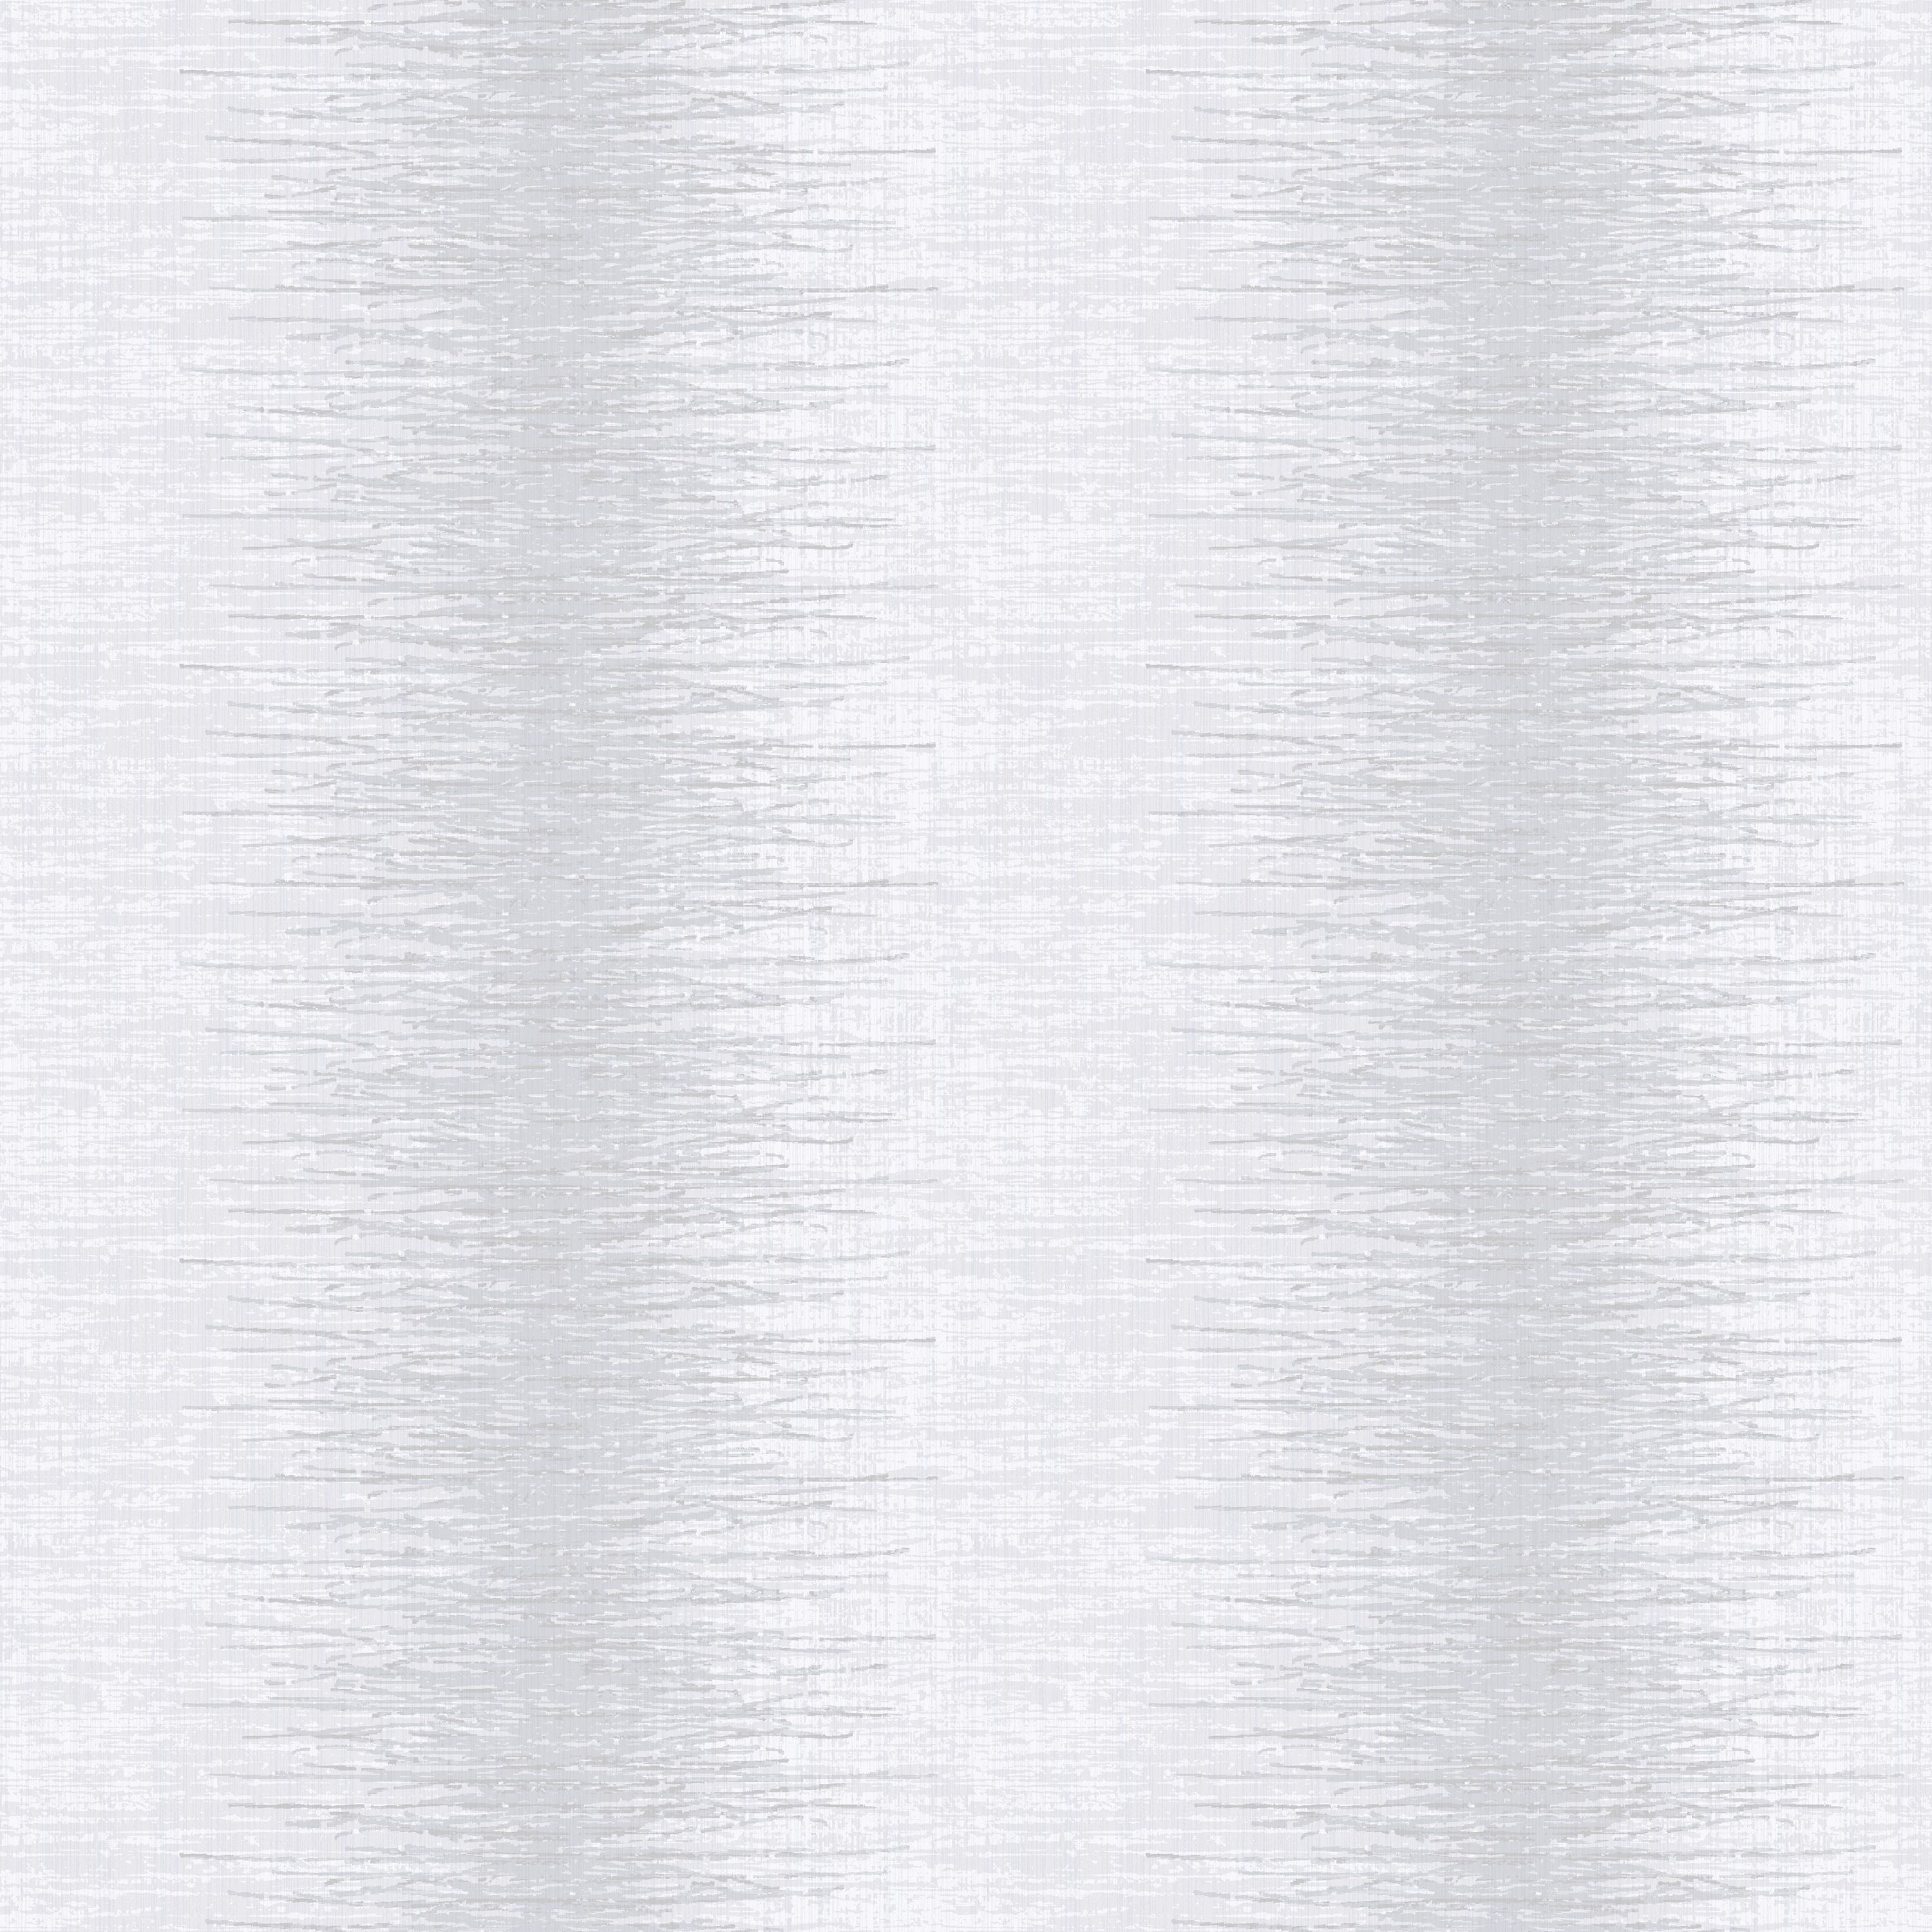 Julien MacDonald Illusion Striped Silver glitter effect Embossed Wallpaper Sample